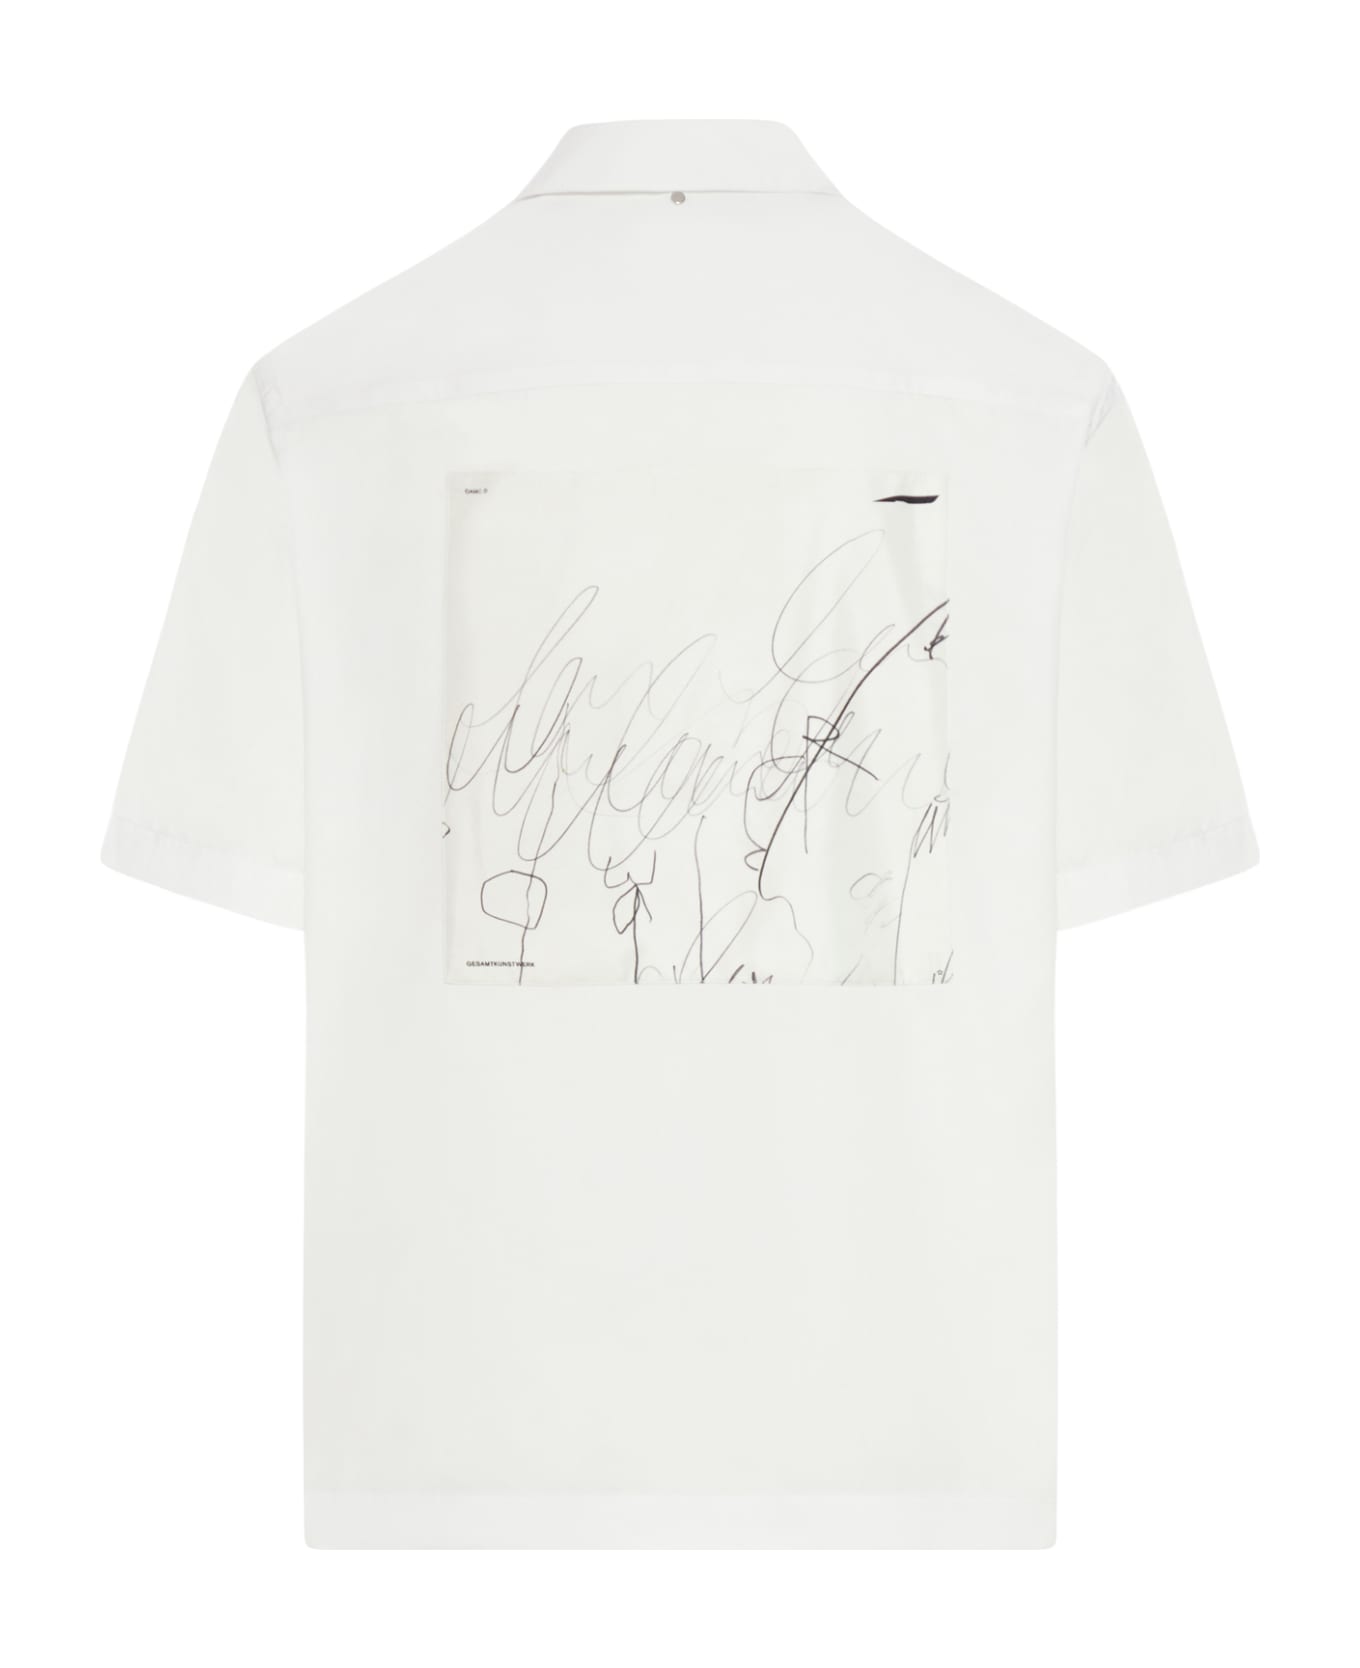 OAMC Kurt Shirt, Scribble Patch - White シャツ